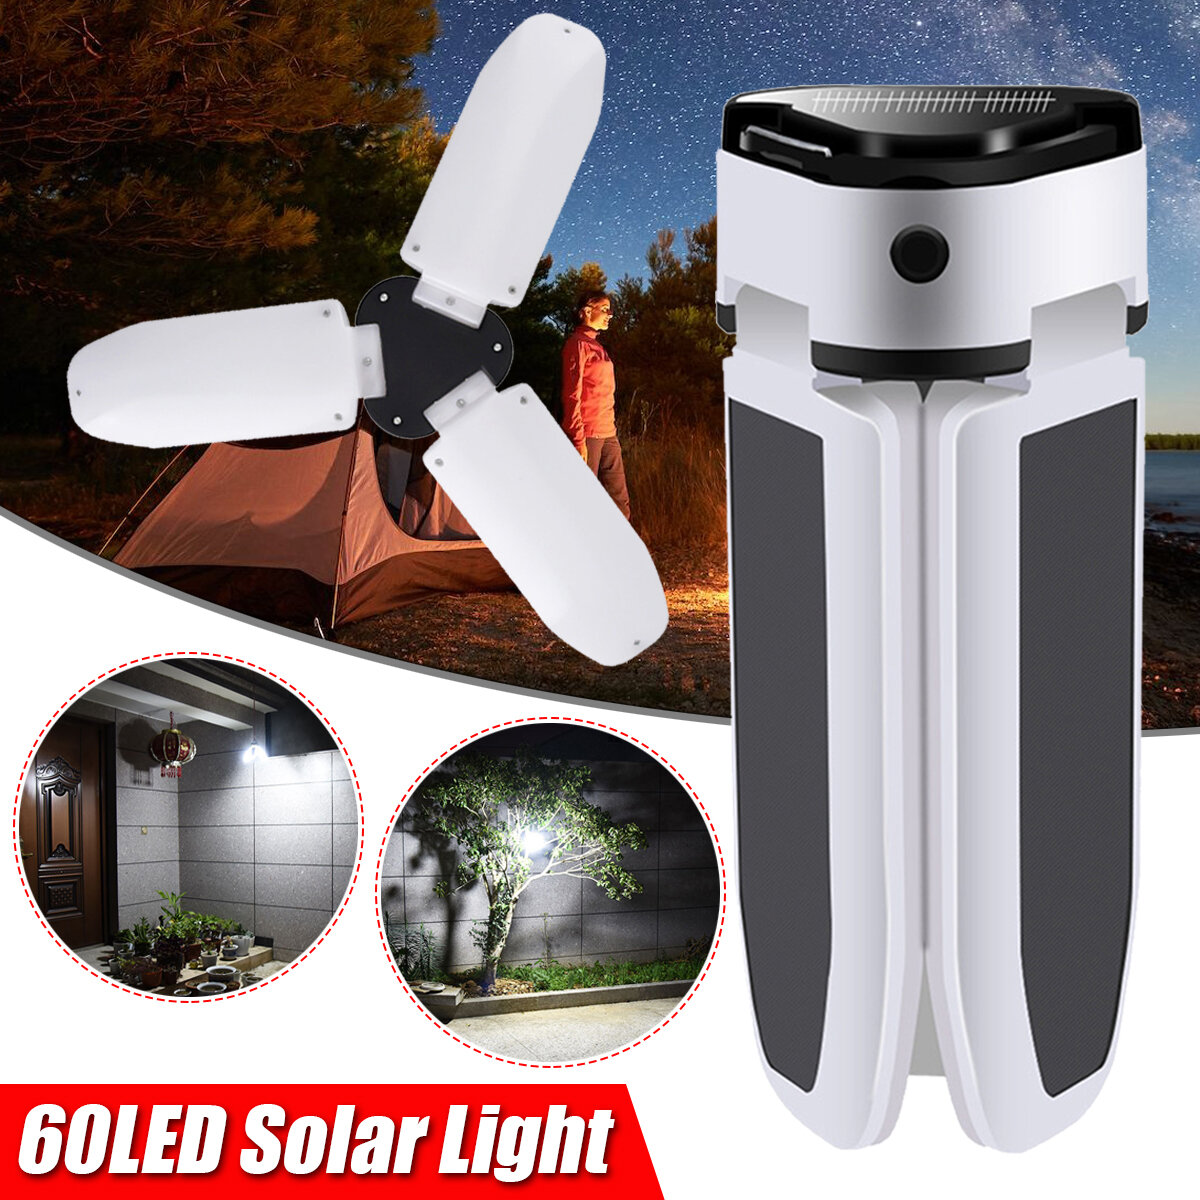 60LED zonne-energie ventilator gloeilamp waterdichte draagbare opvouwbare campinglamp voor buiten